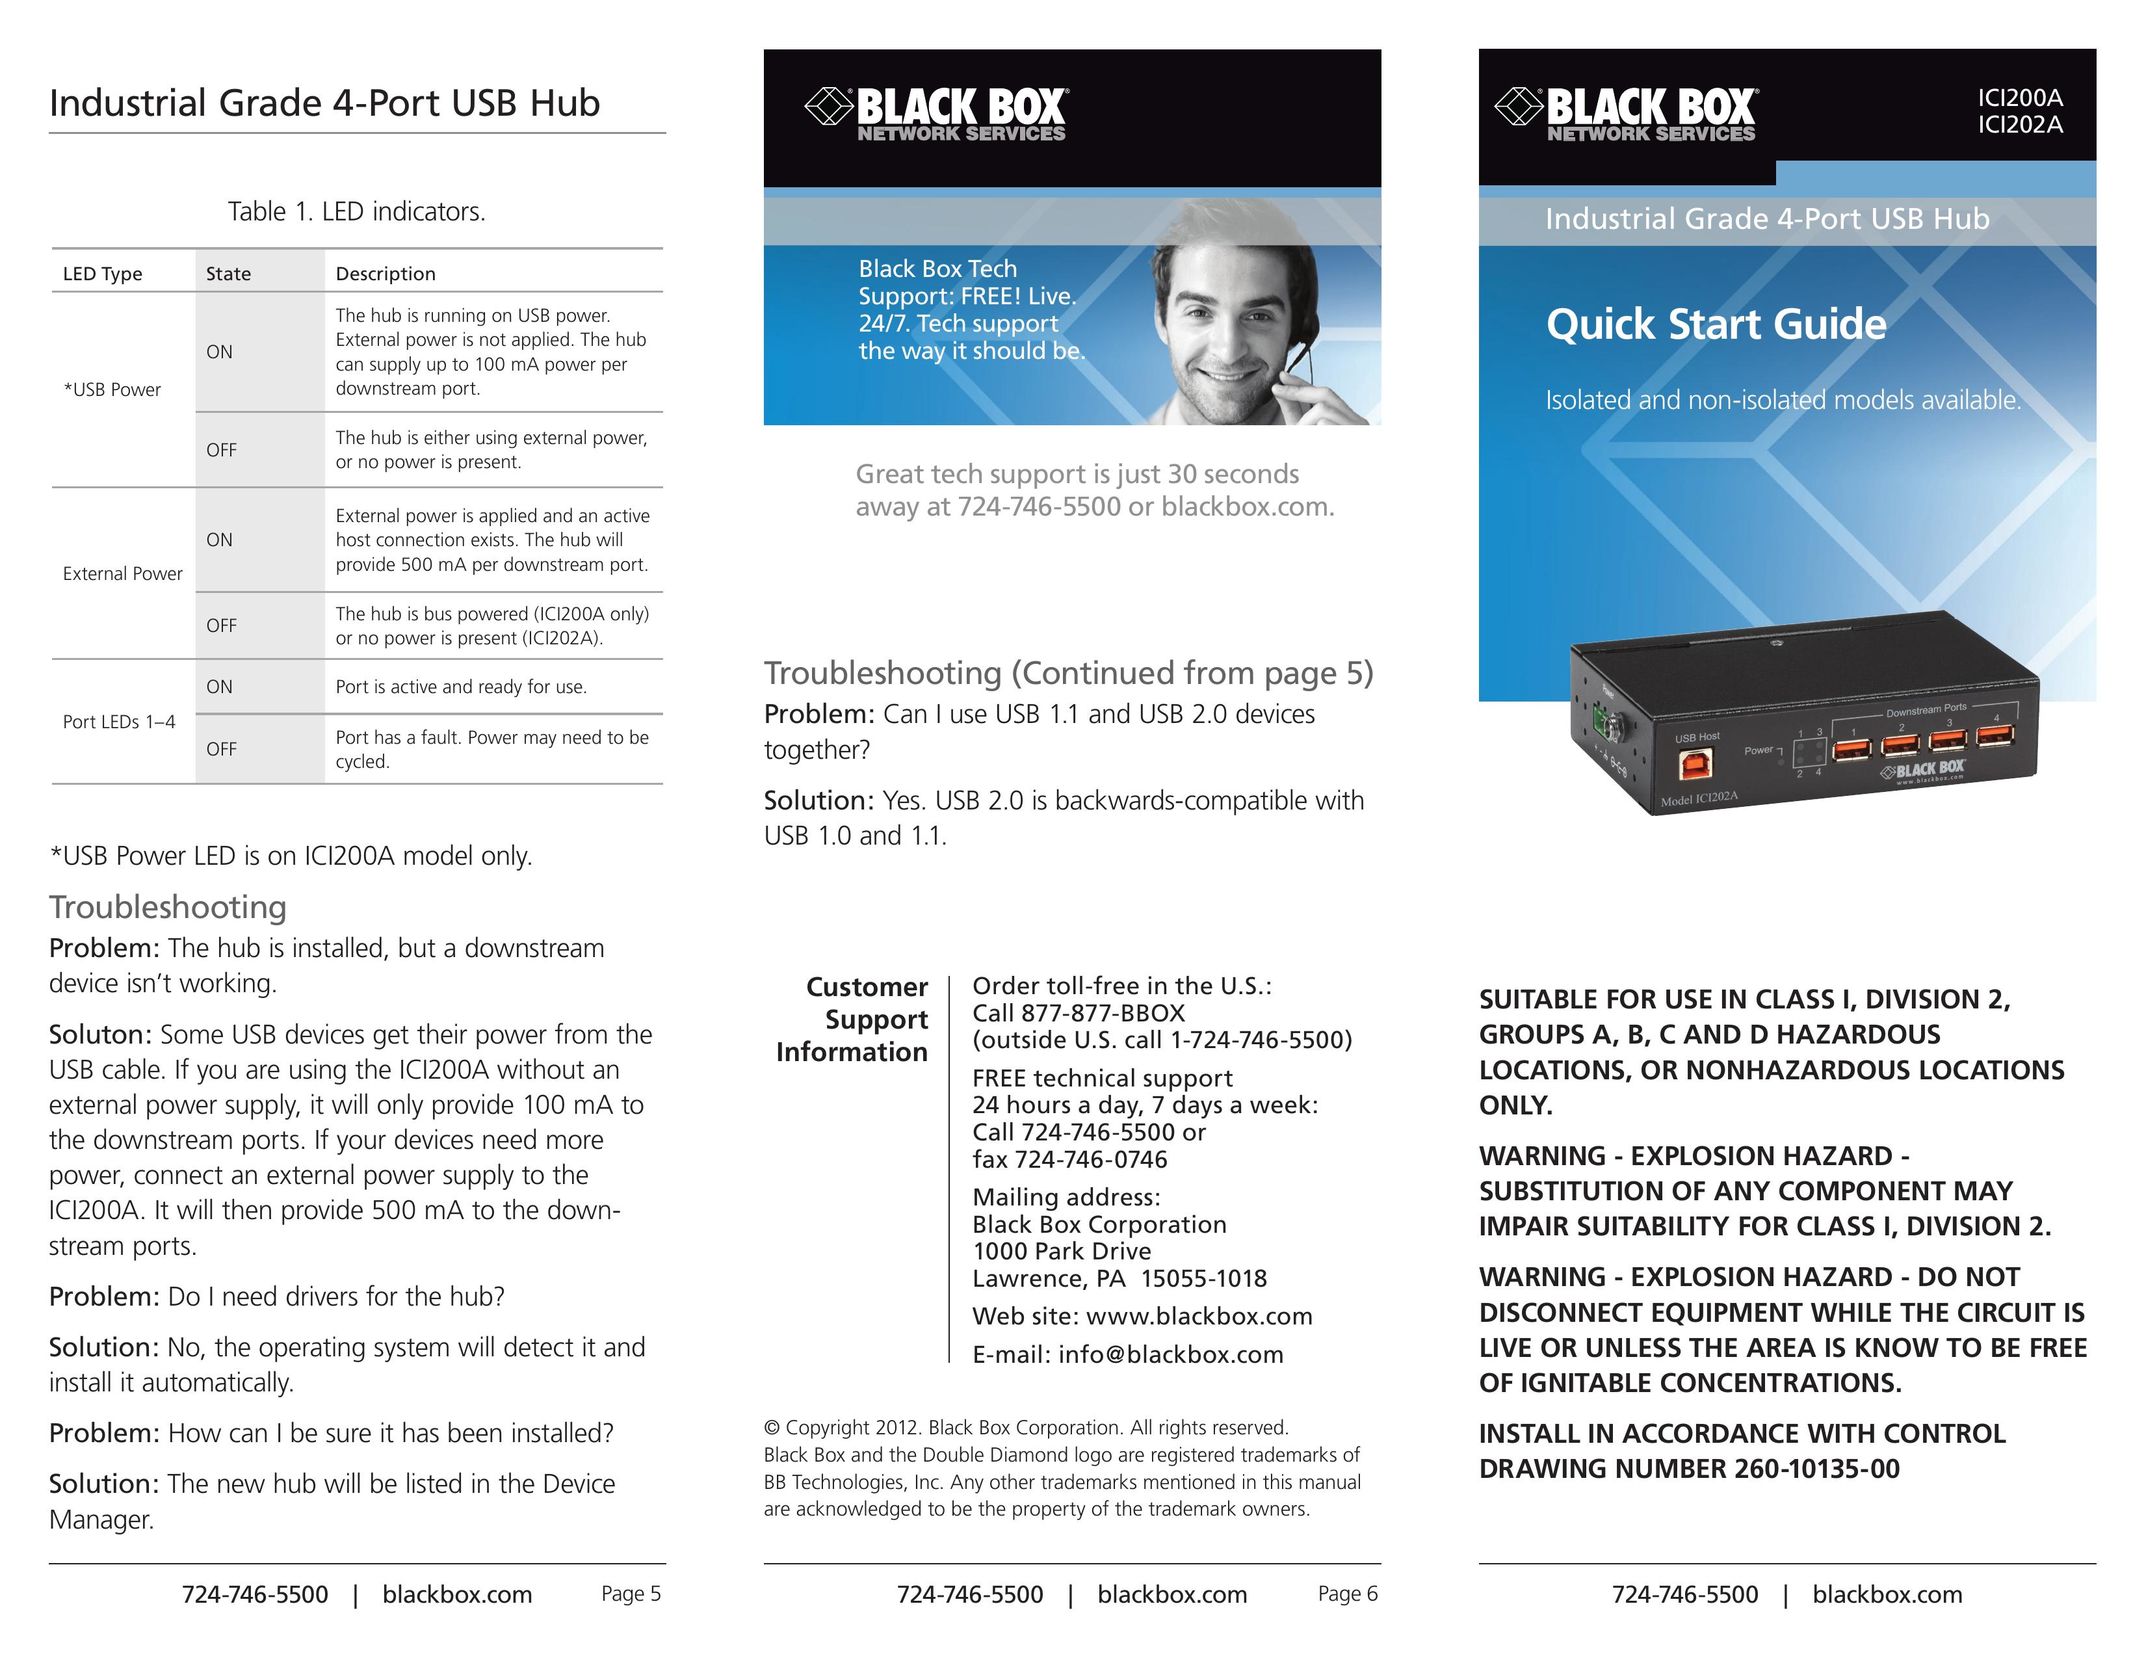 Black Box Industrial Grade 4-Port USB Hub Humidifier User Manual